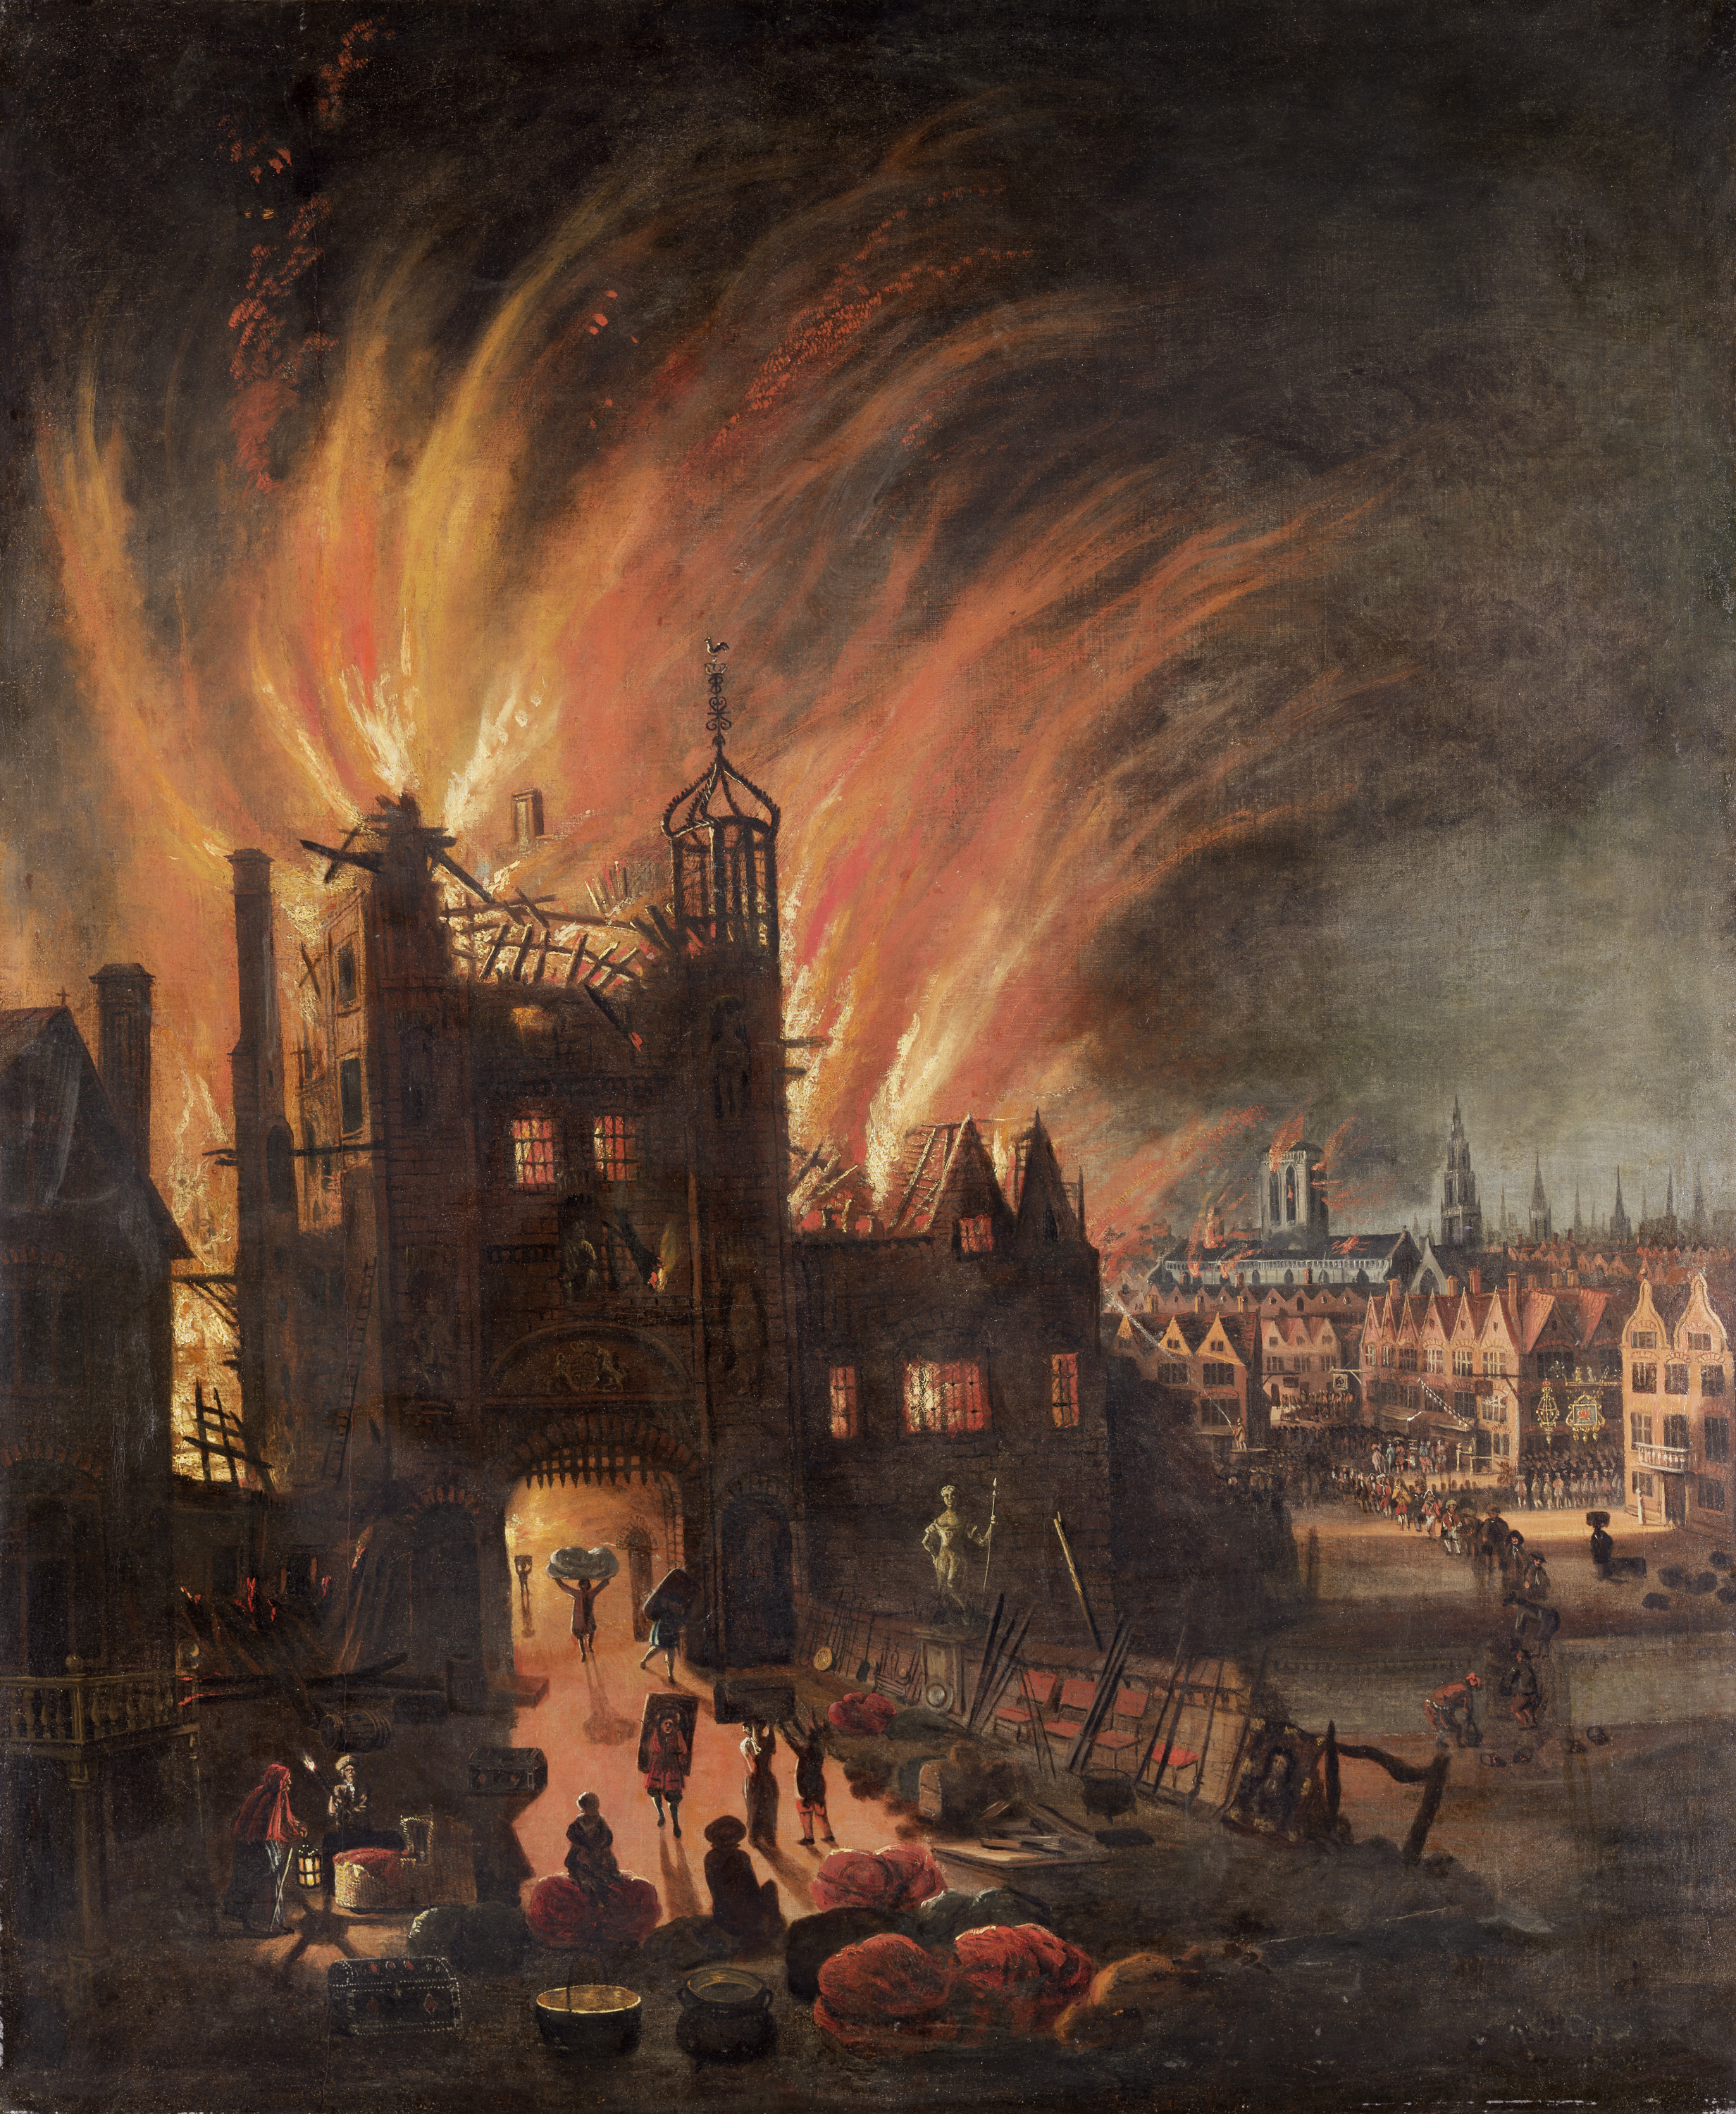 Great Fire of London